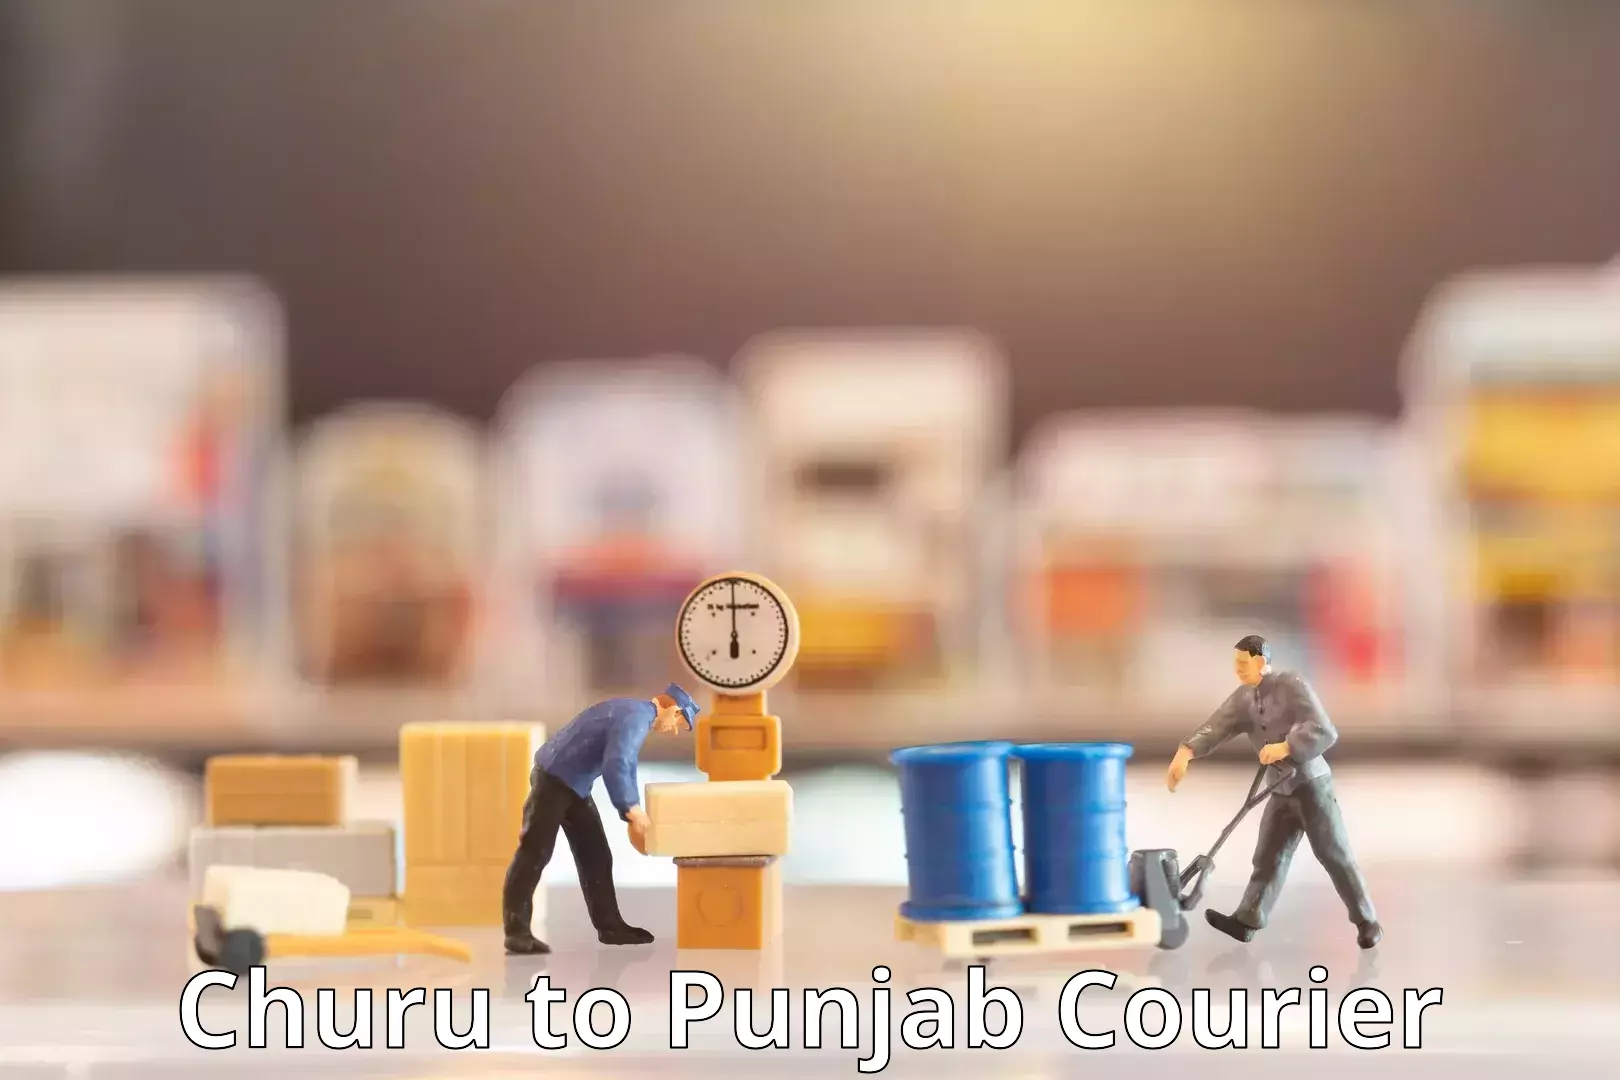 Bulk courier orders Churu to Mohali